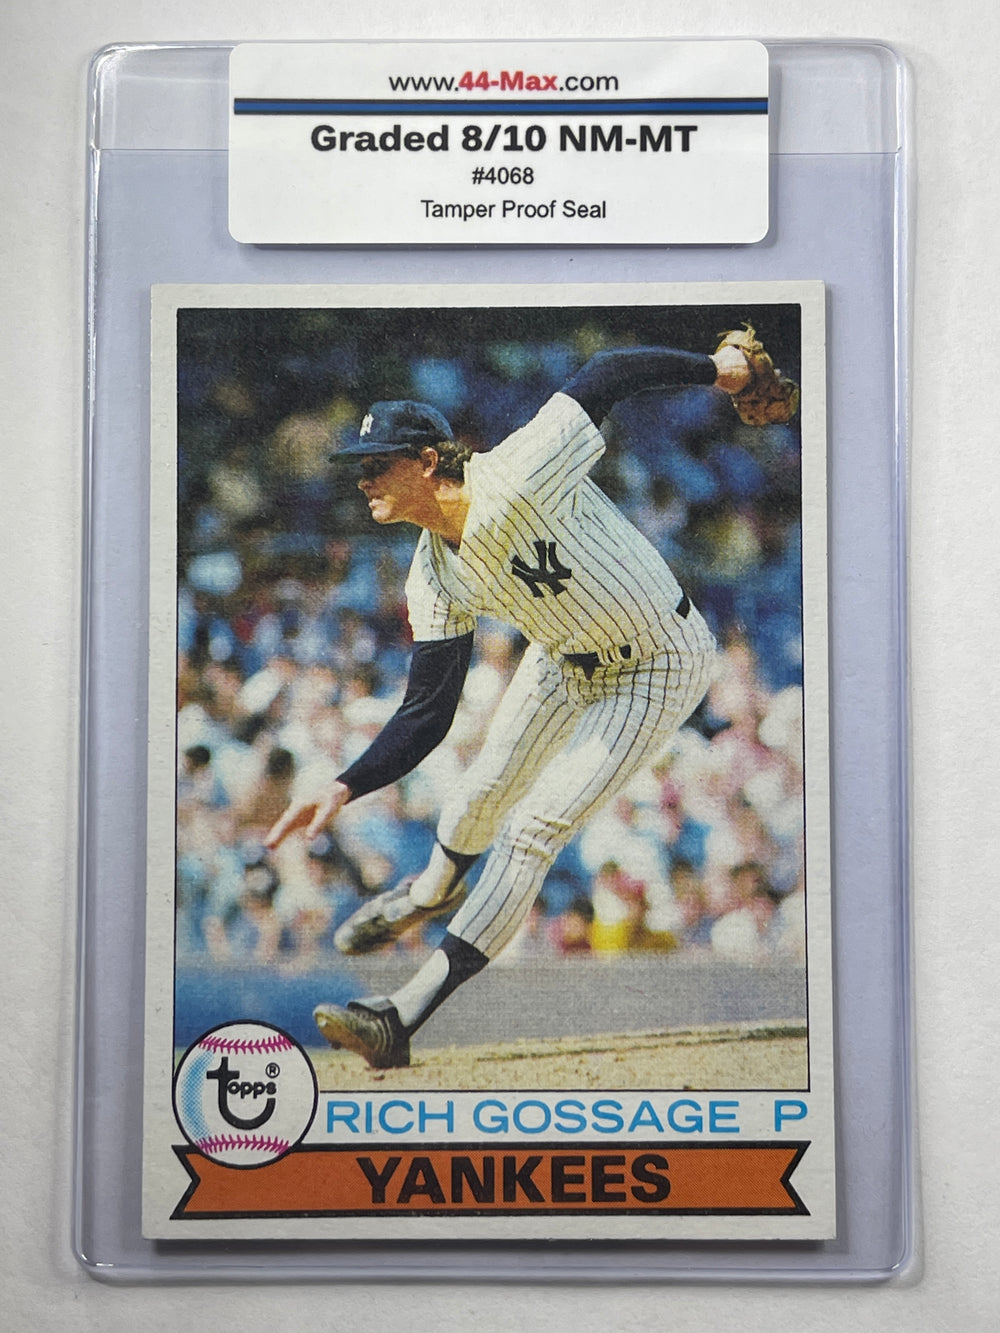 Rich Gossage 1979 Topps Baseball Card. 44-Max 8/10 NM-MT #4068